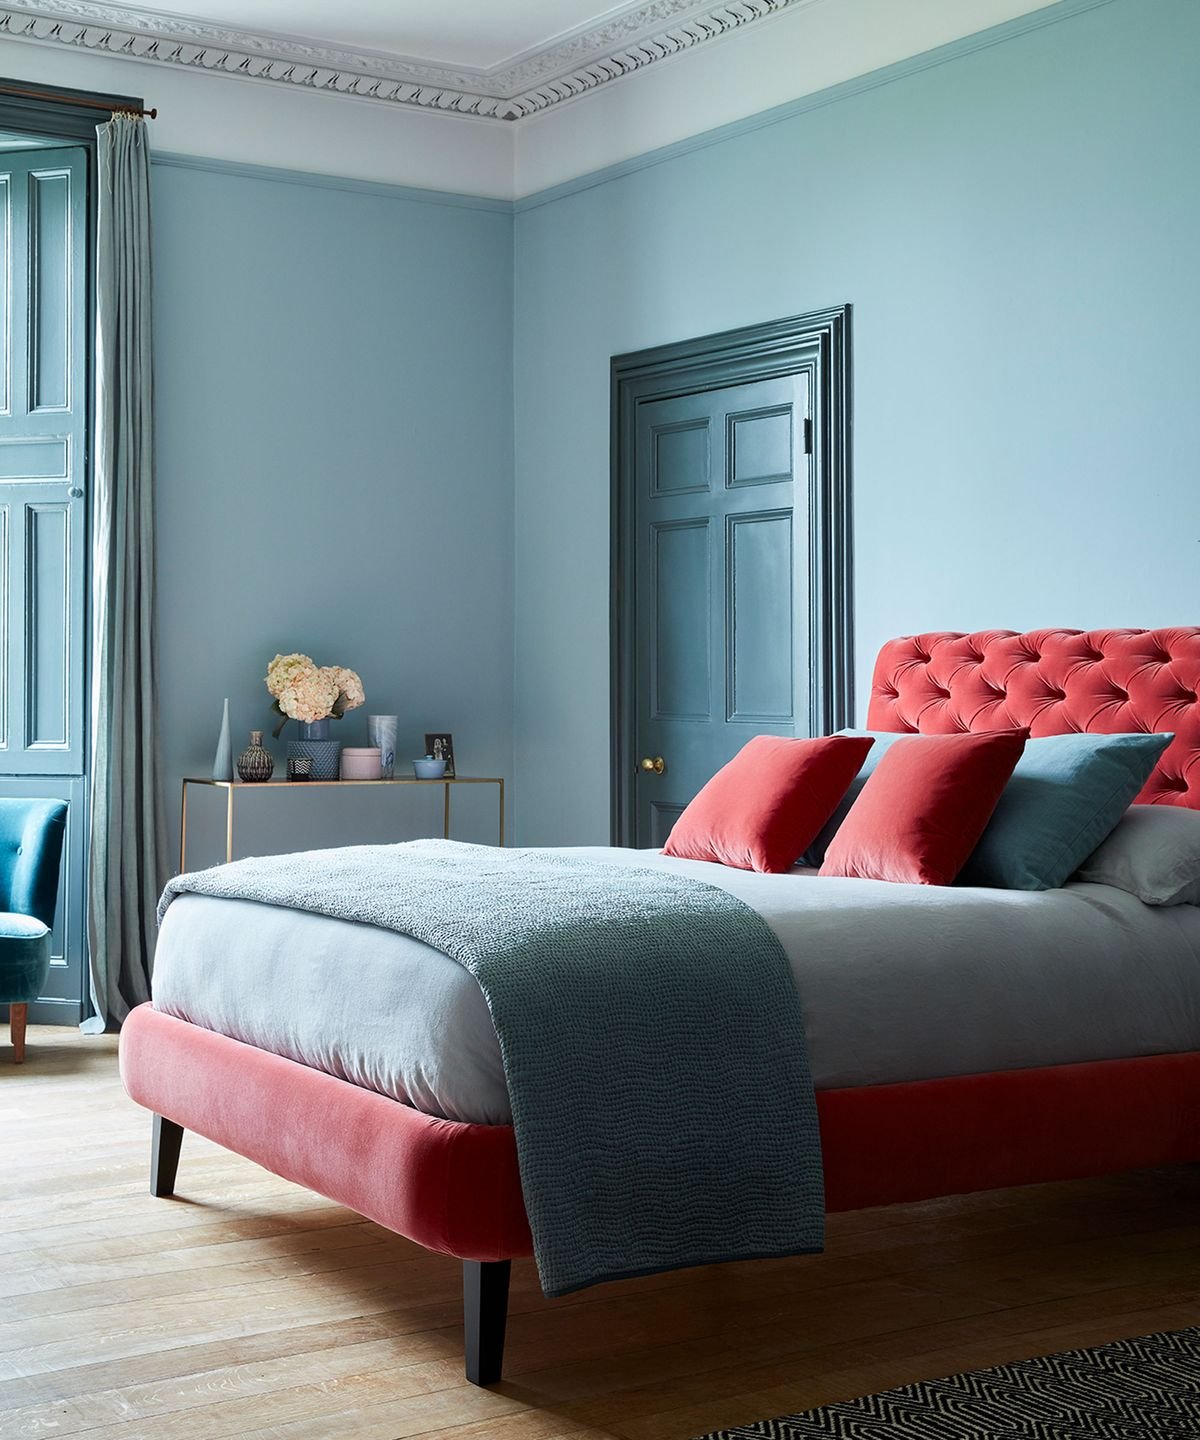 5 ways to create the perfect bedroom sanctuary